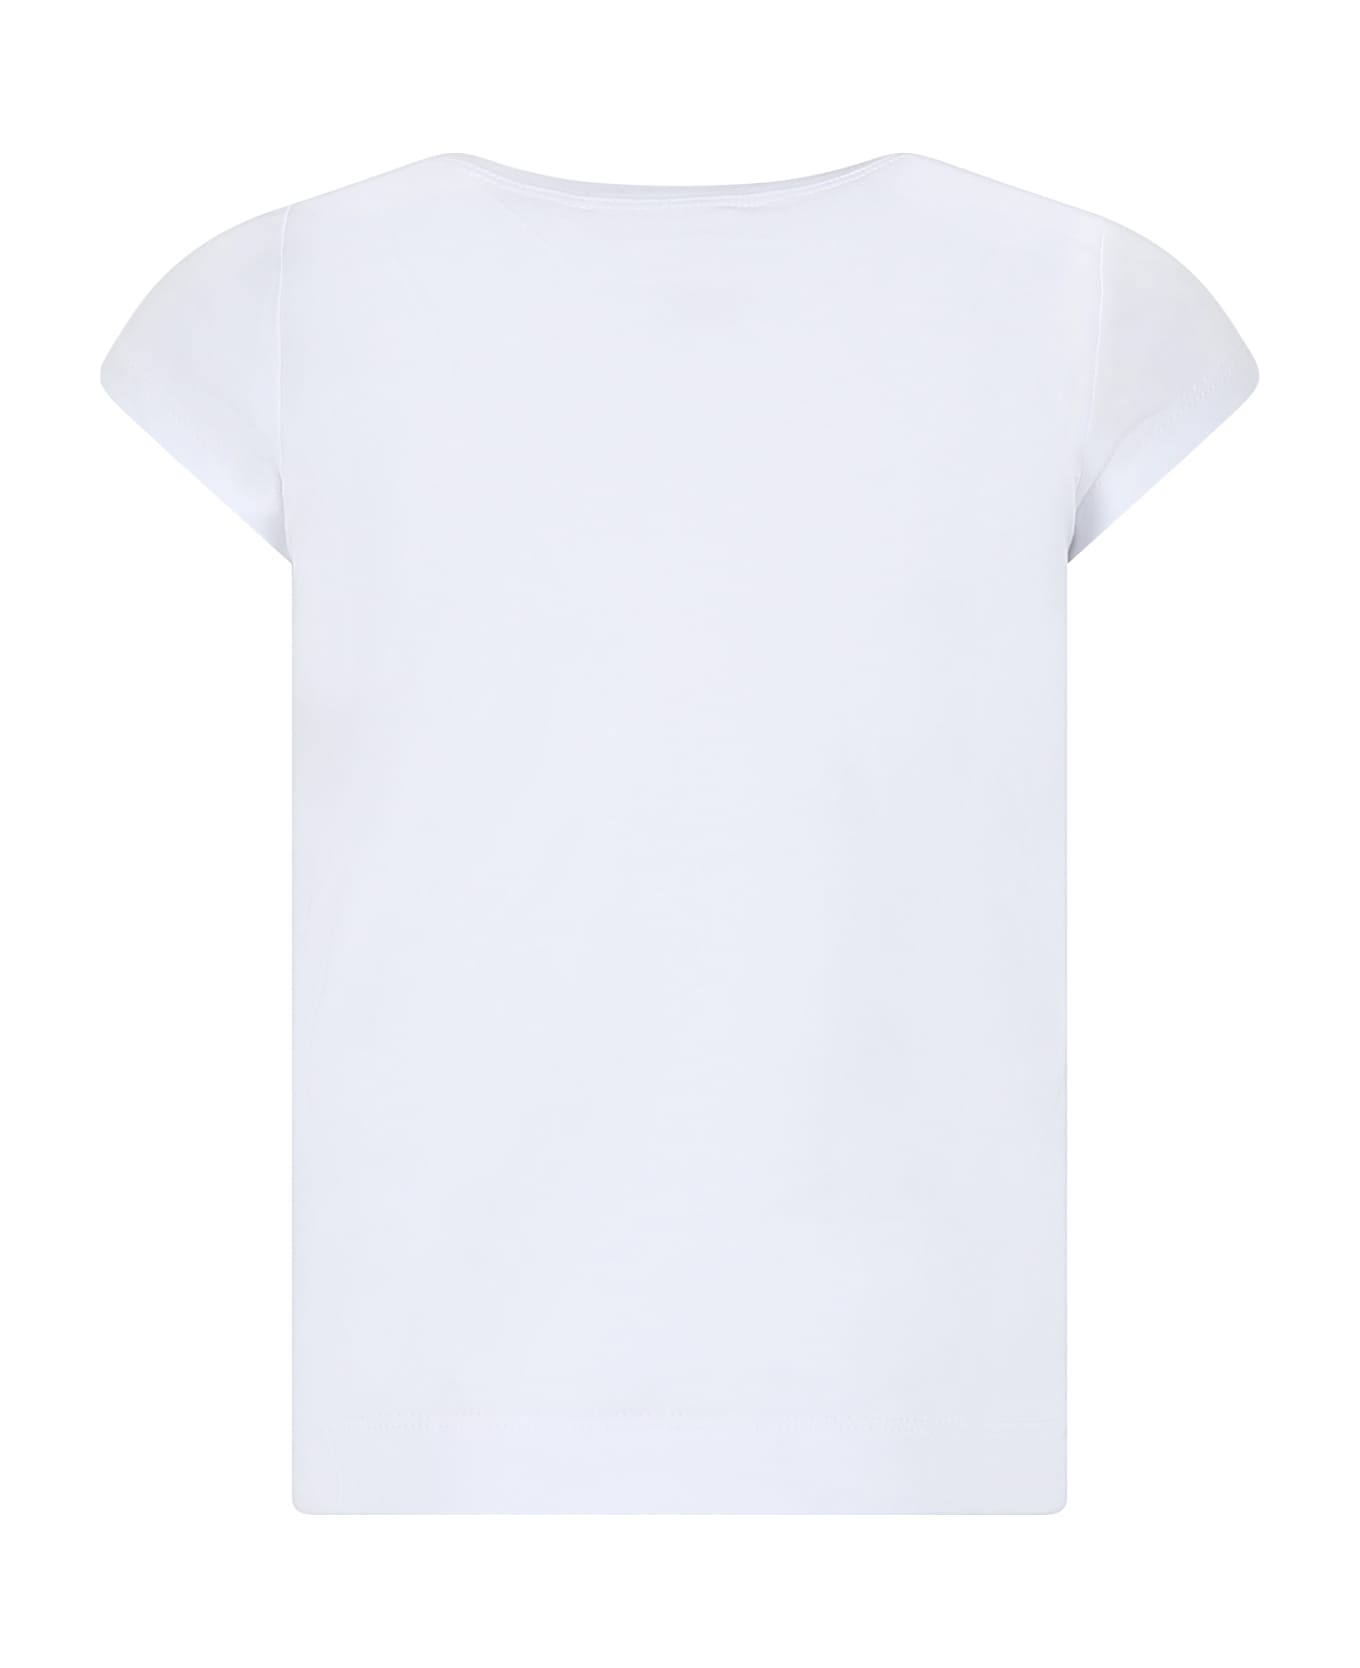 Monnalisa White Crop T-shirt For Girl With Barbie Print And Rhinestone - White